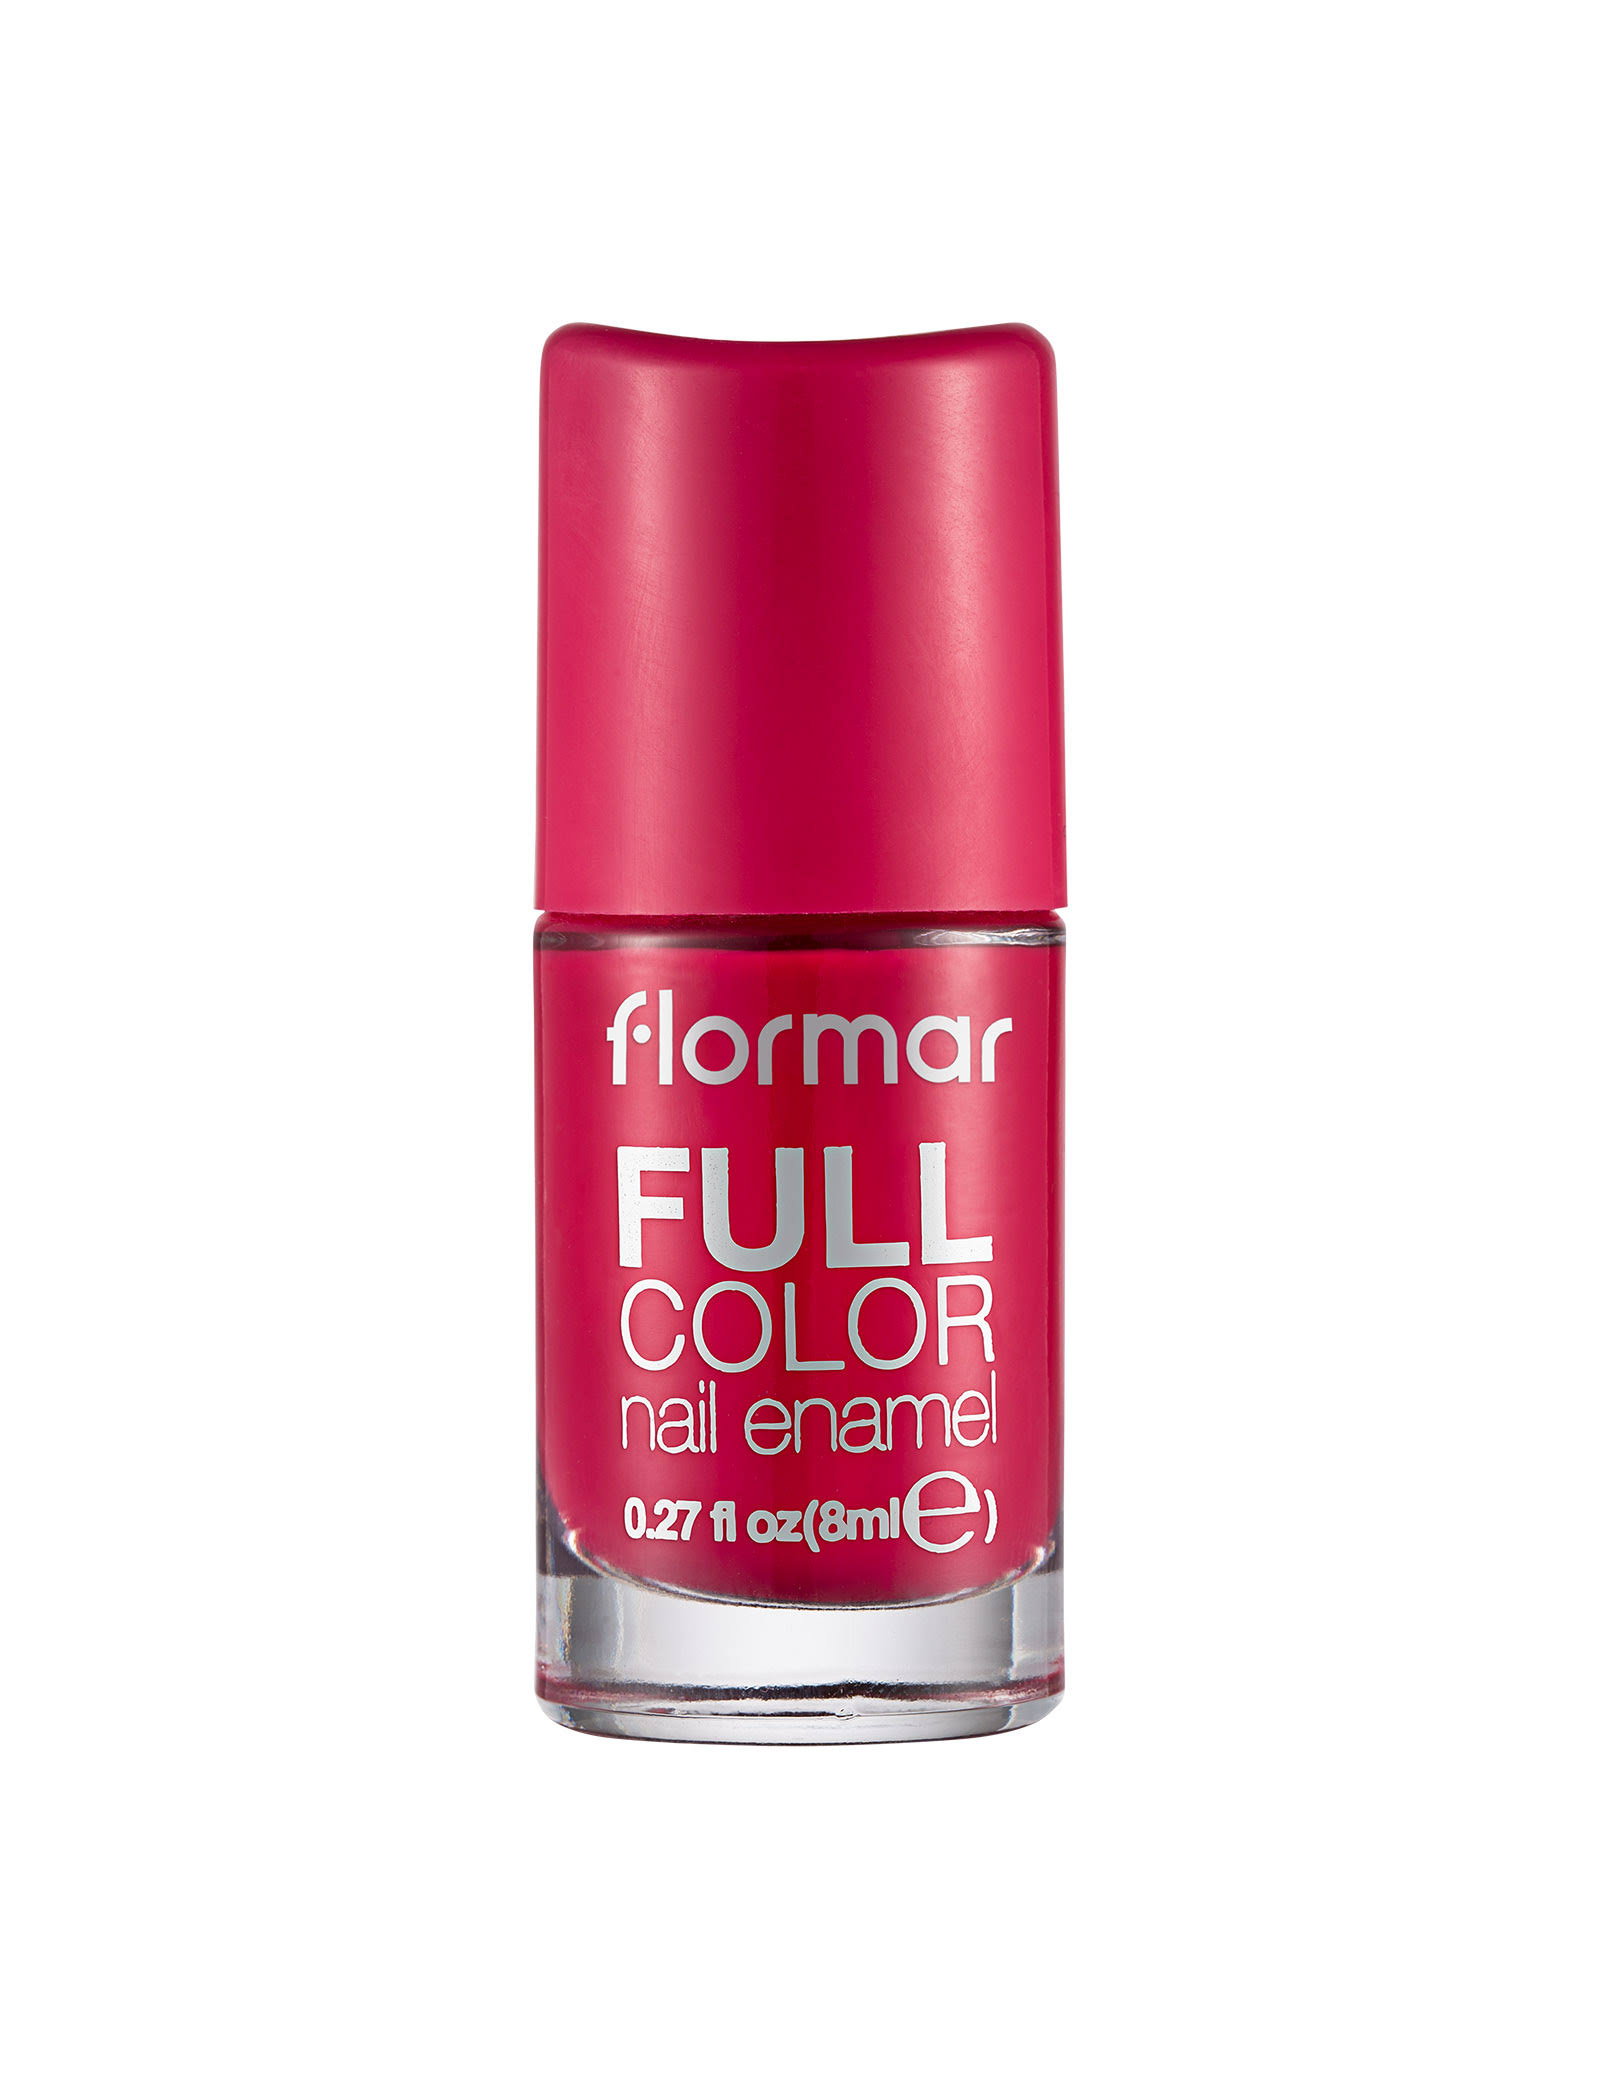 Flormar Full Color Nail Enamel Polish - Squashed Raspberry, 8ml